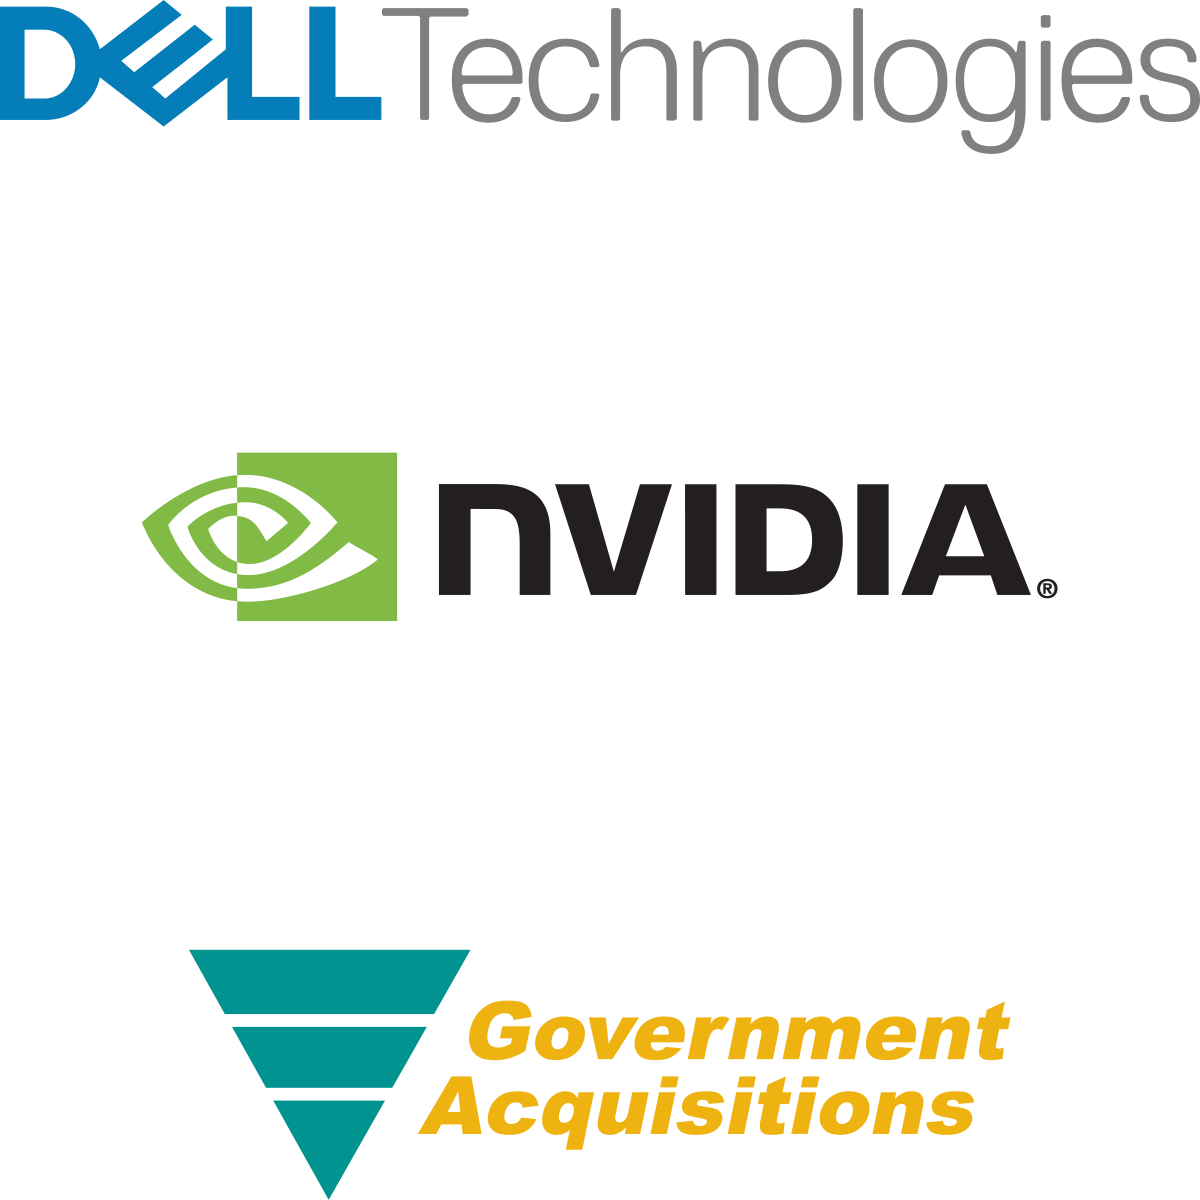 Dell Technologies | NVIDIA | GAI's logo